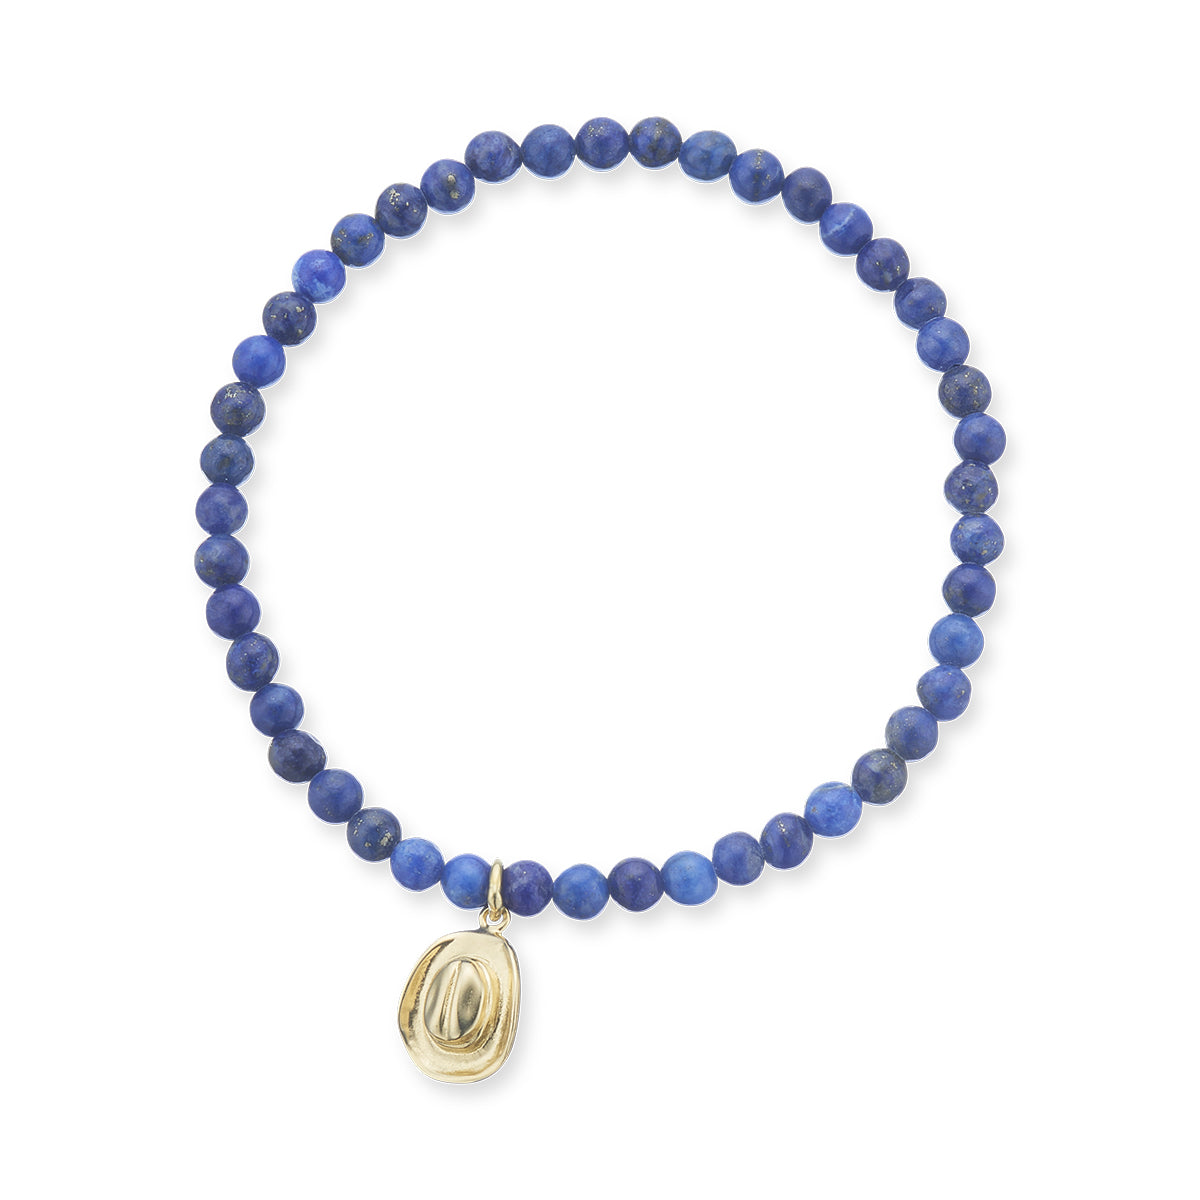 Akubra hat charm lapis lazuli bracelet